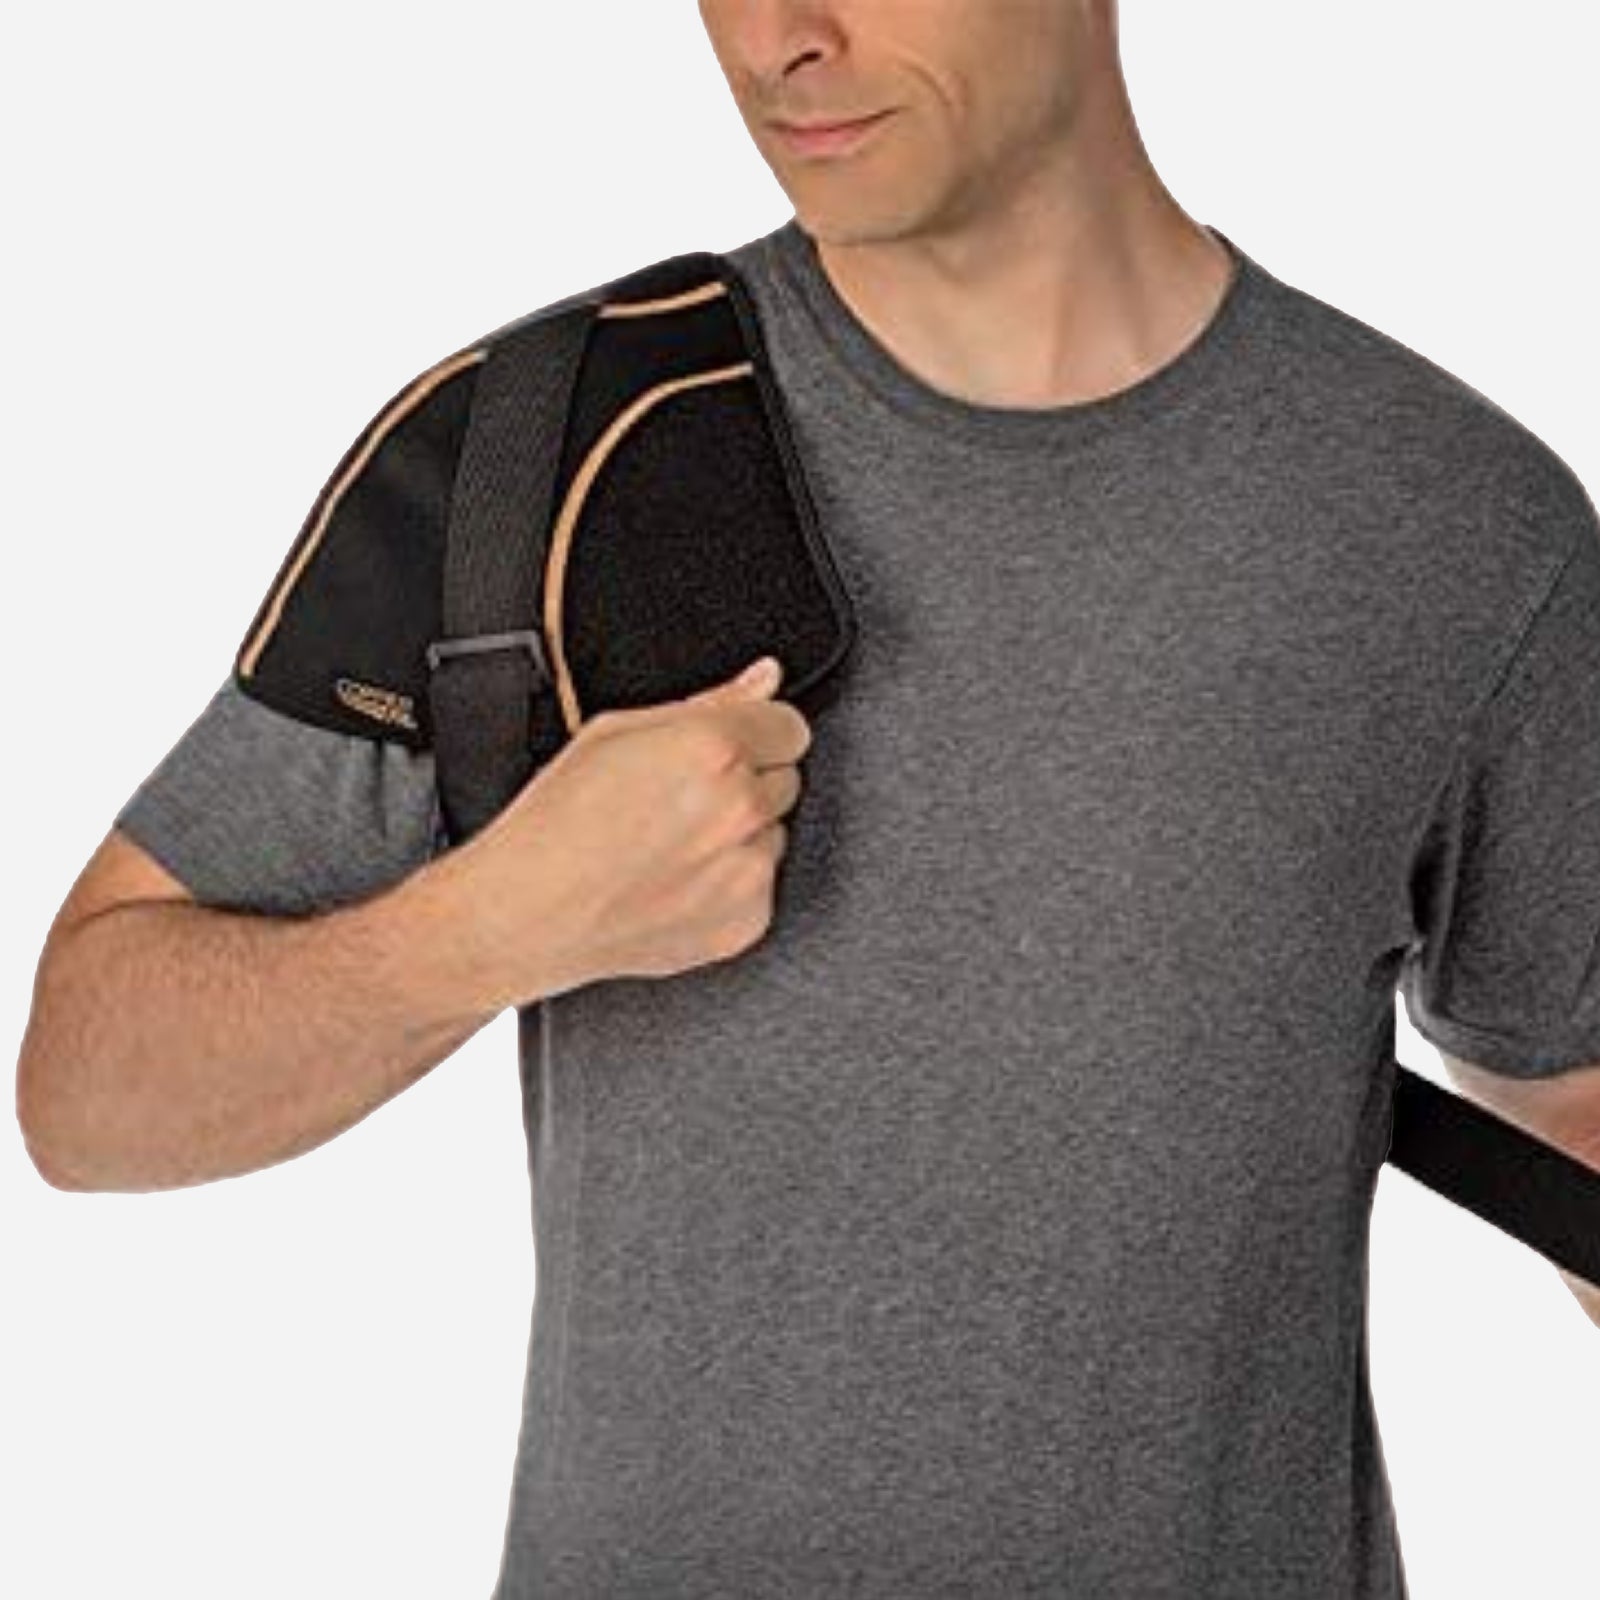 ObusForme Heated Comfort Portable Lumbar/Lower Back Support Belt/Brace,  Small/Medium